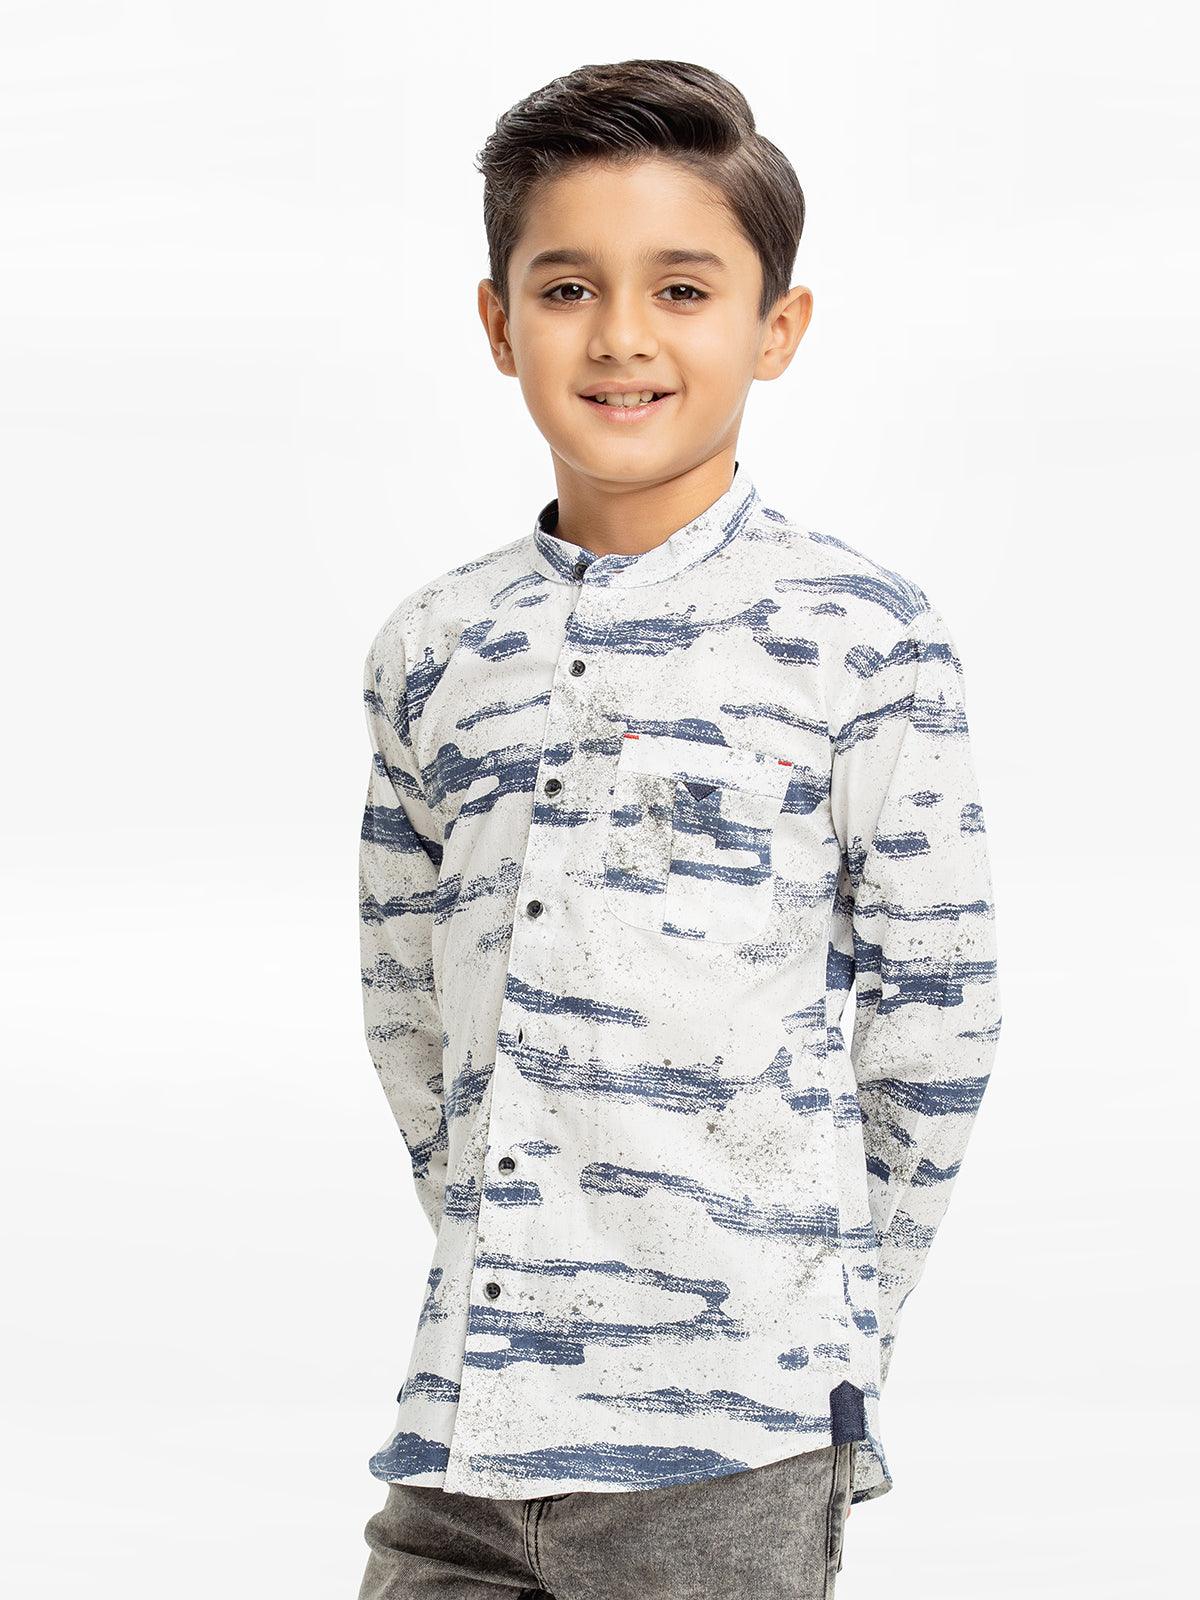 Boy's White & Blue Shirt - EBTS23-27509